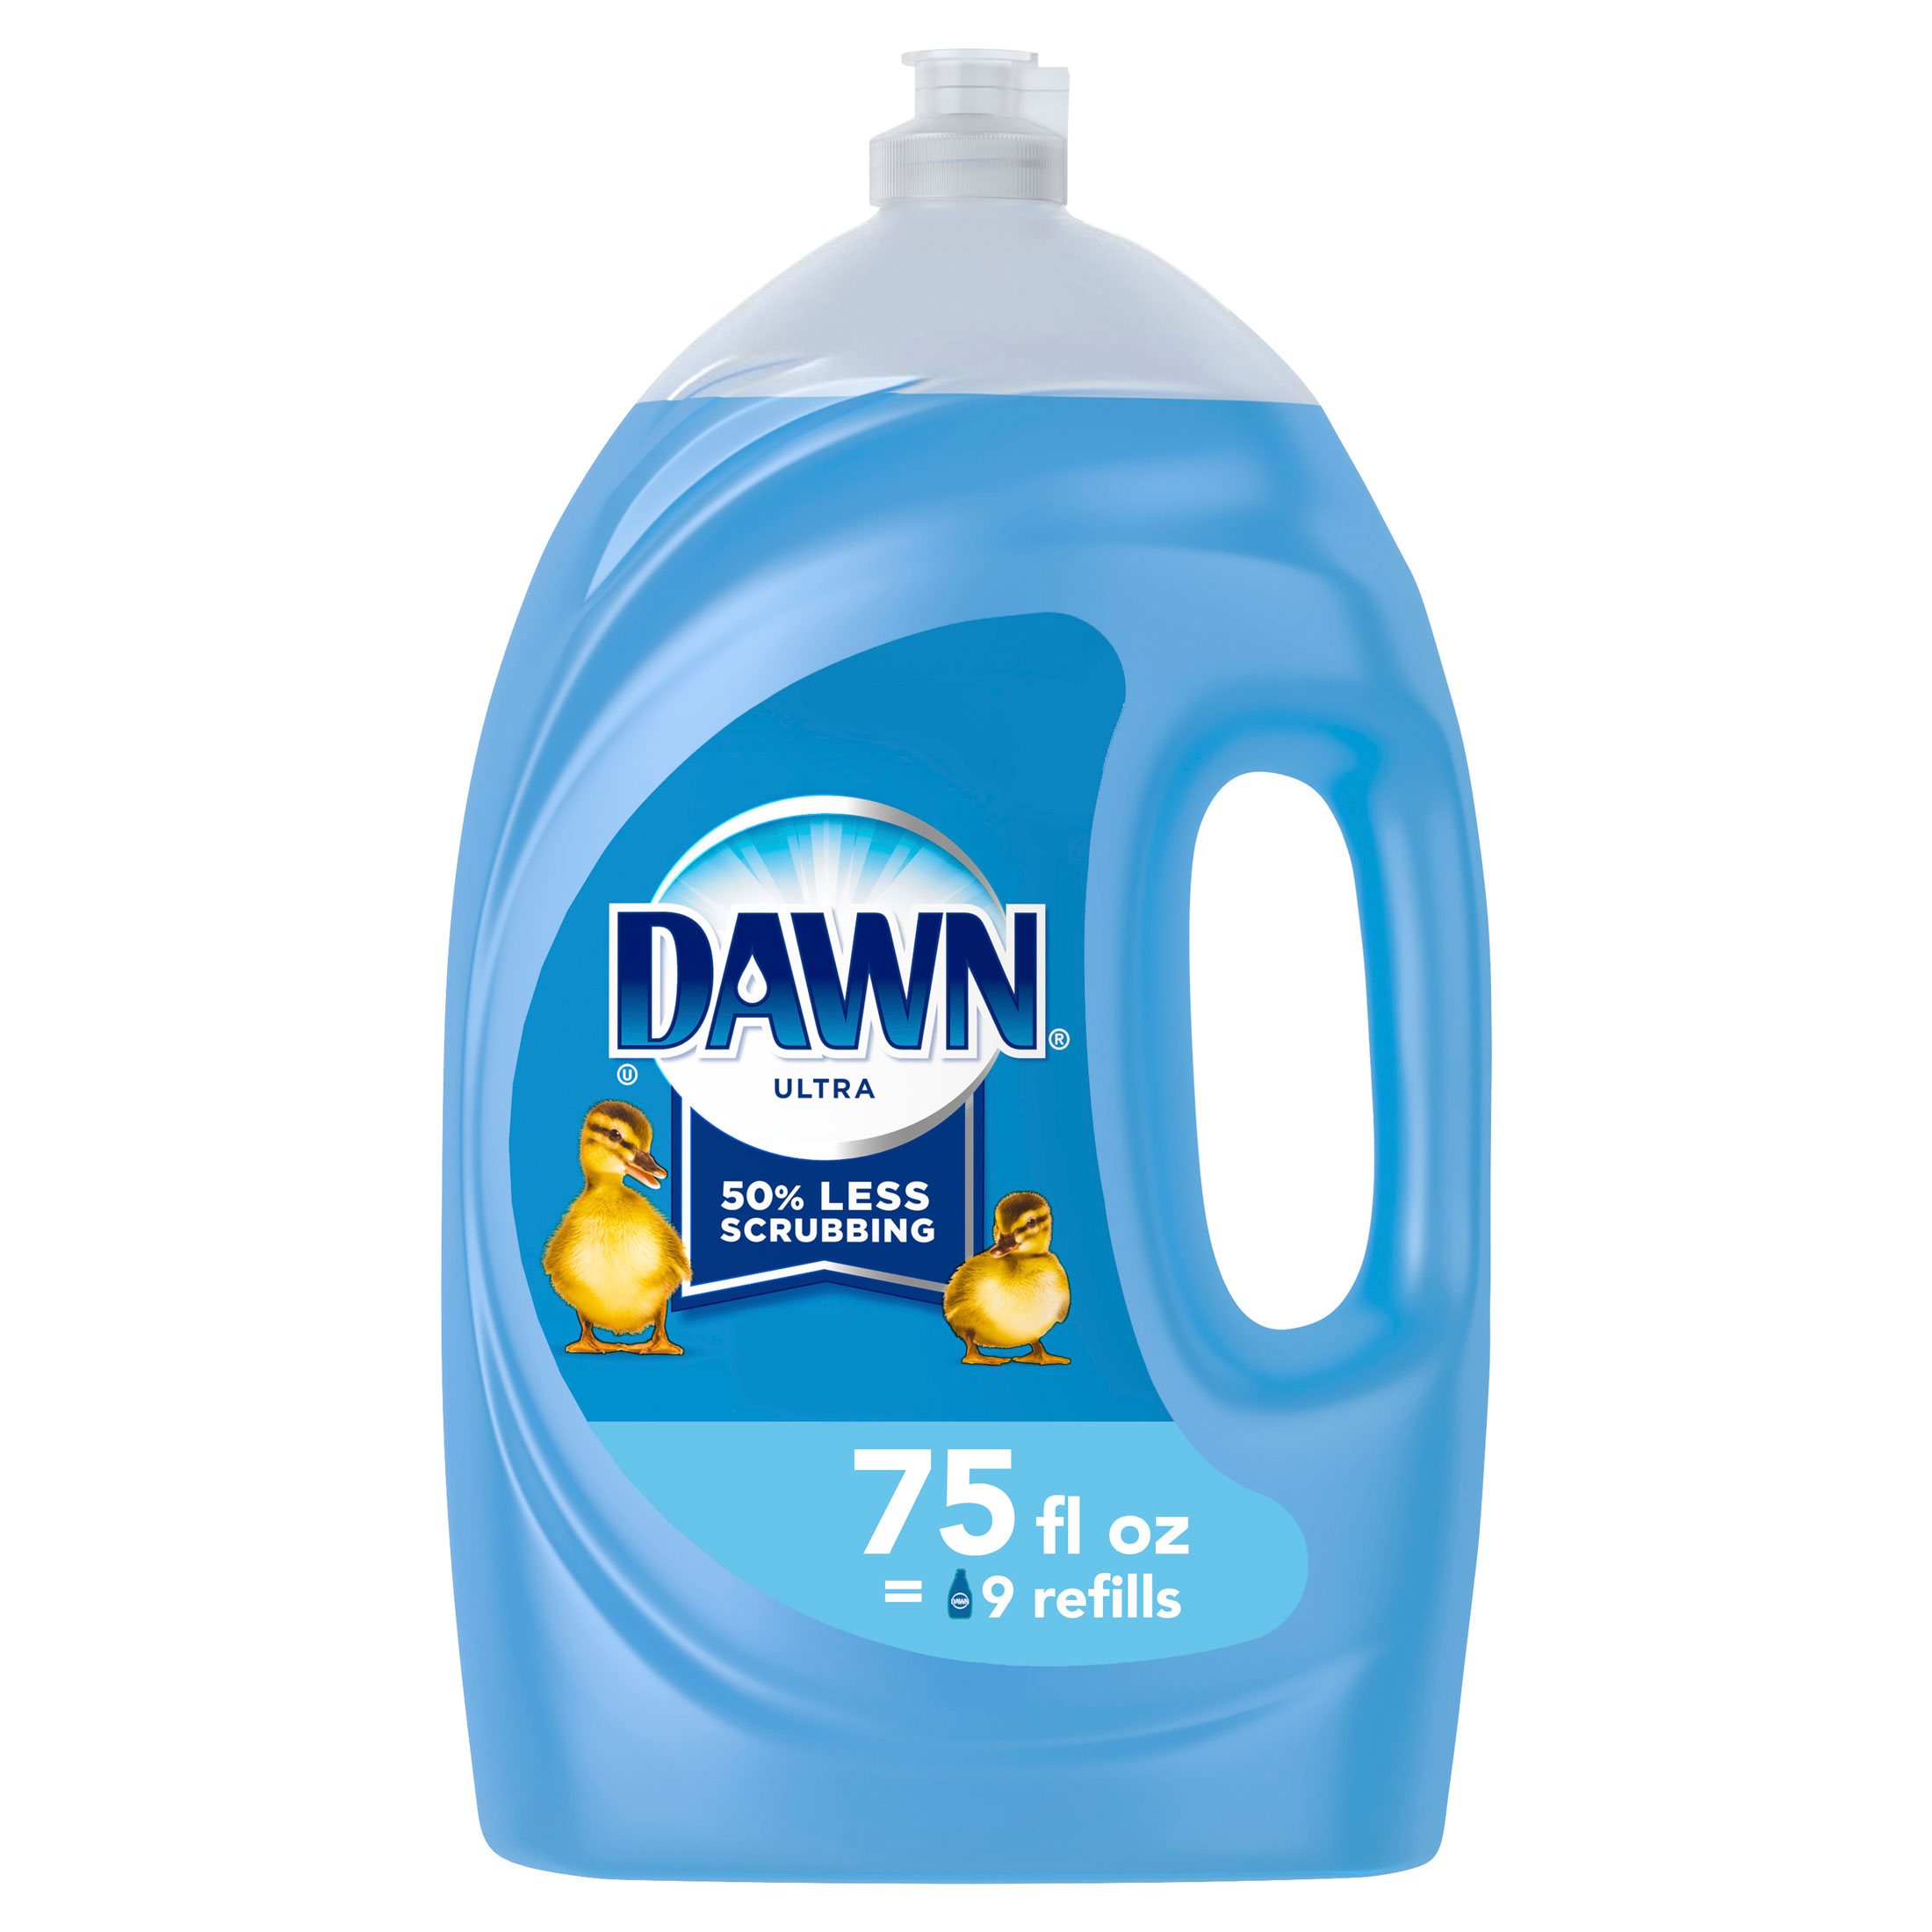 dawn soap